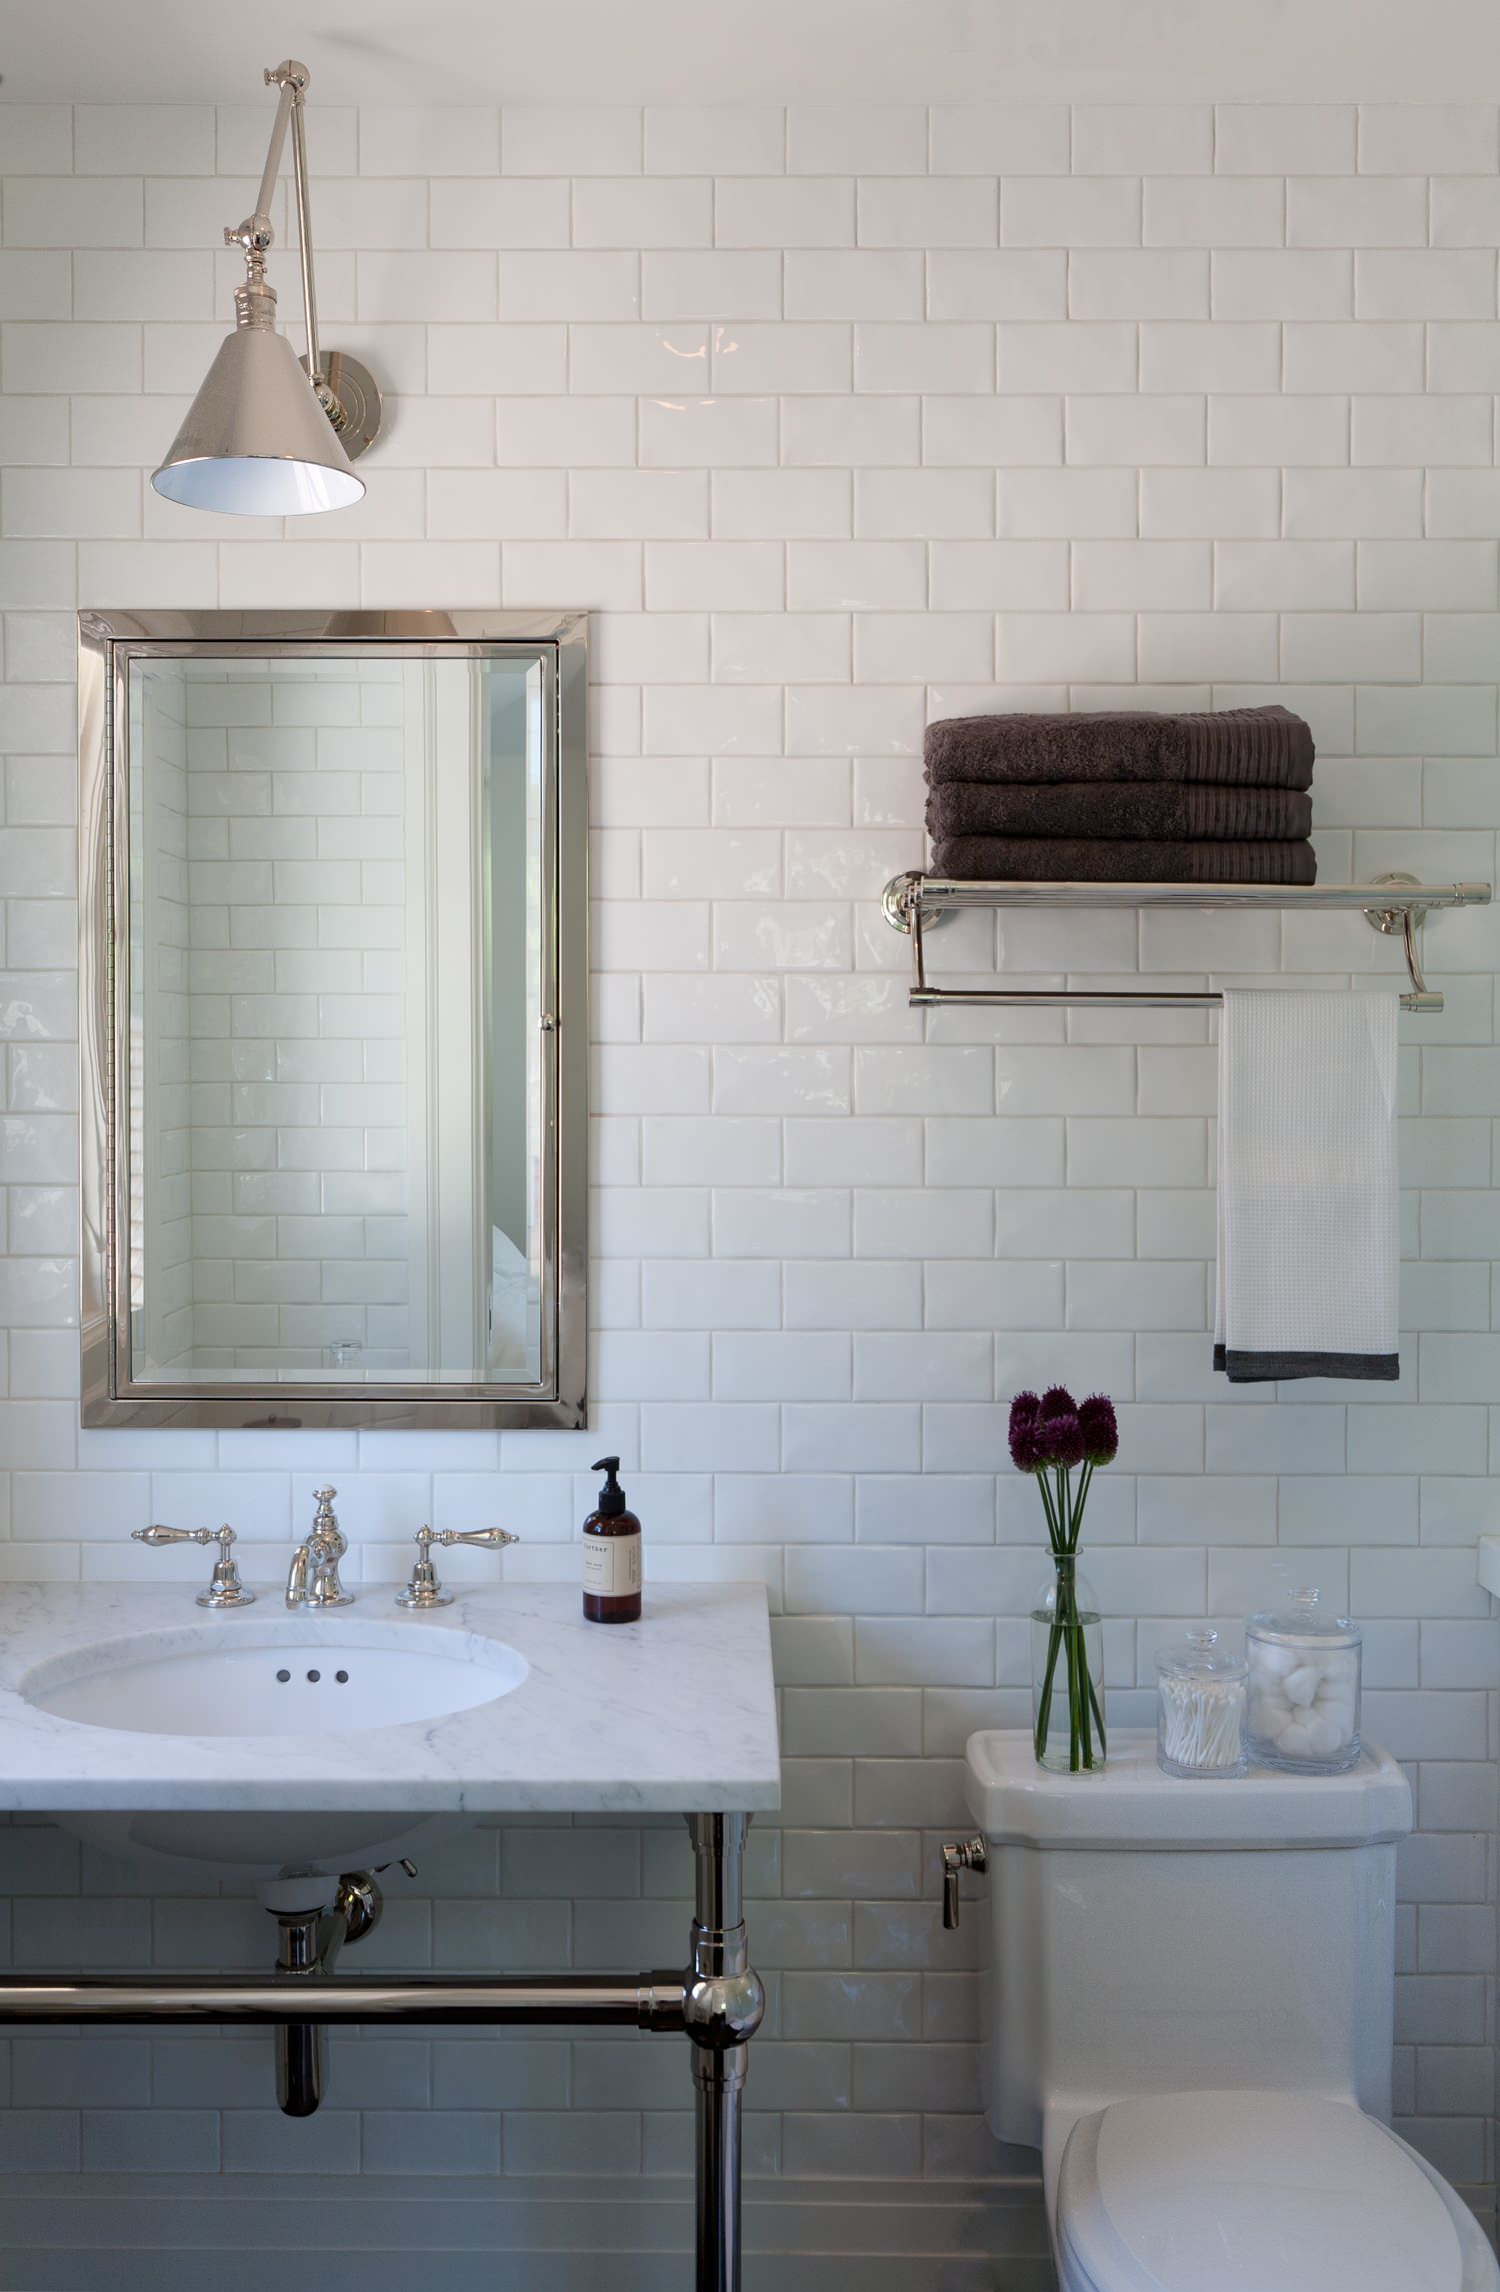 Towel Rack Above Toilet - Photos & Ideas | Houzz